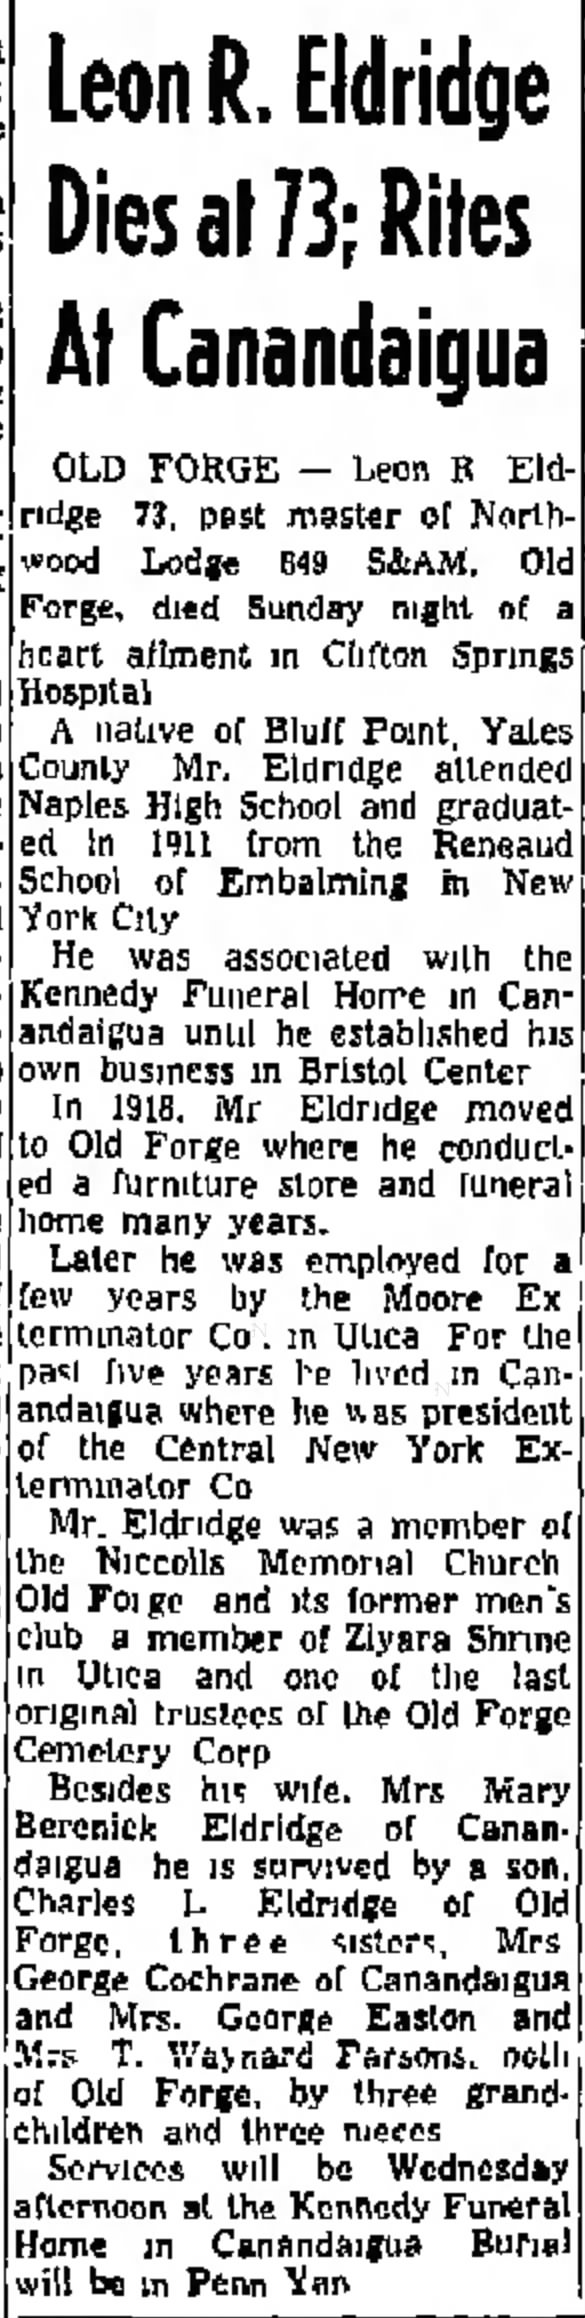 Obituary of Leon R. Eldridge, The Post-Standard, Syracuse, New York, Tuesday, 6 Nov 1962, Page 28